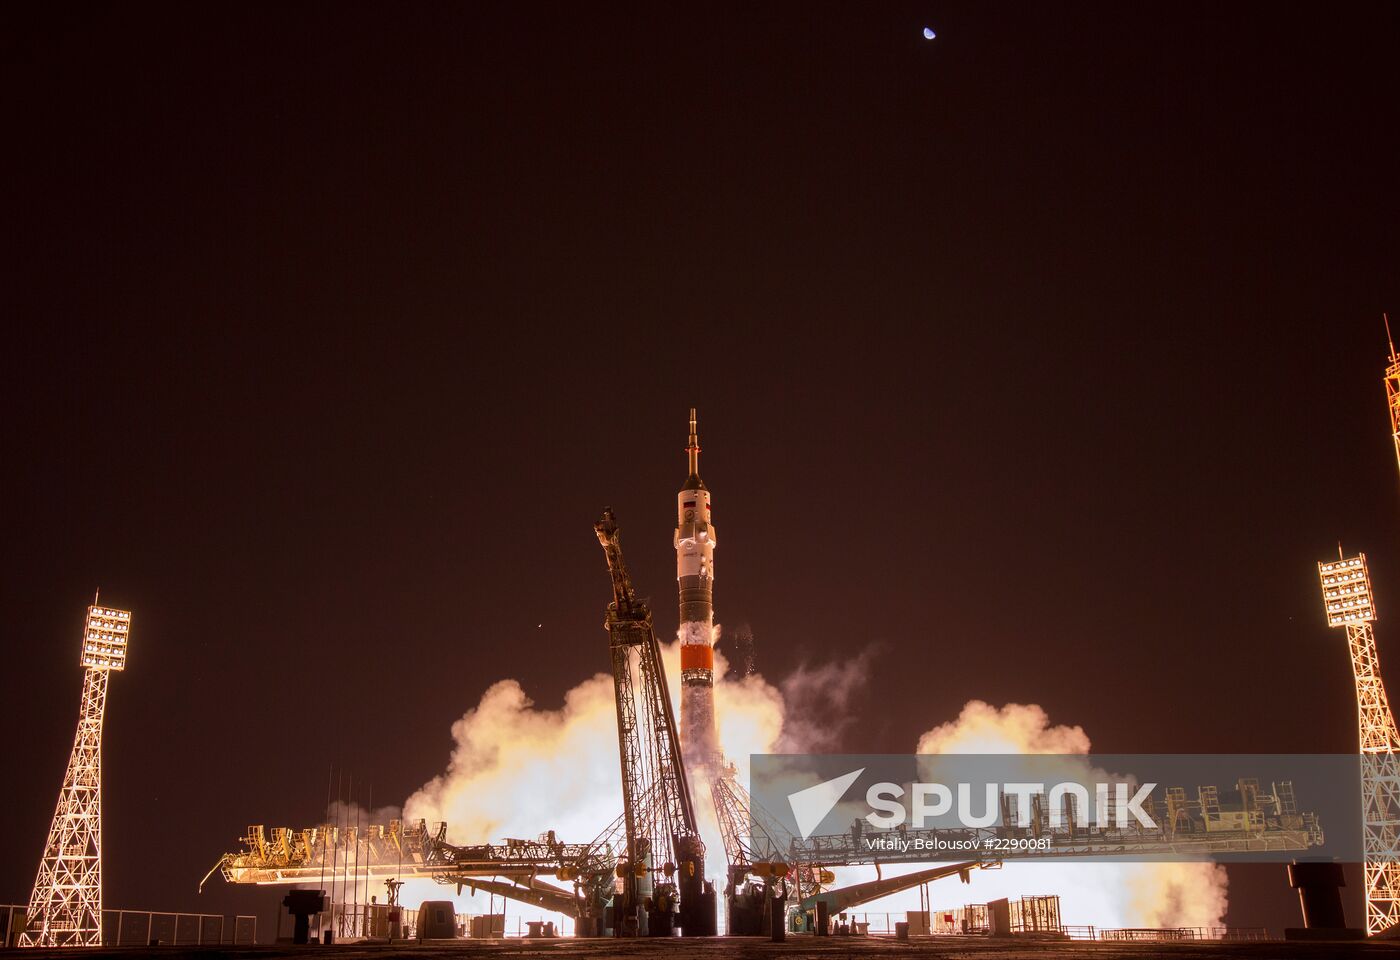 Launch of Soyuz-FG rocket with Soyuz TMA-10M manned spacecraft